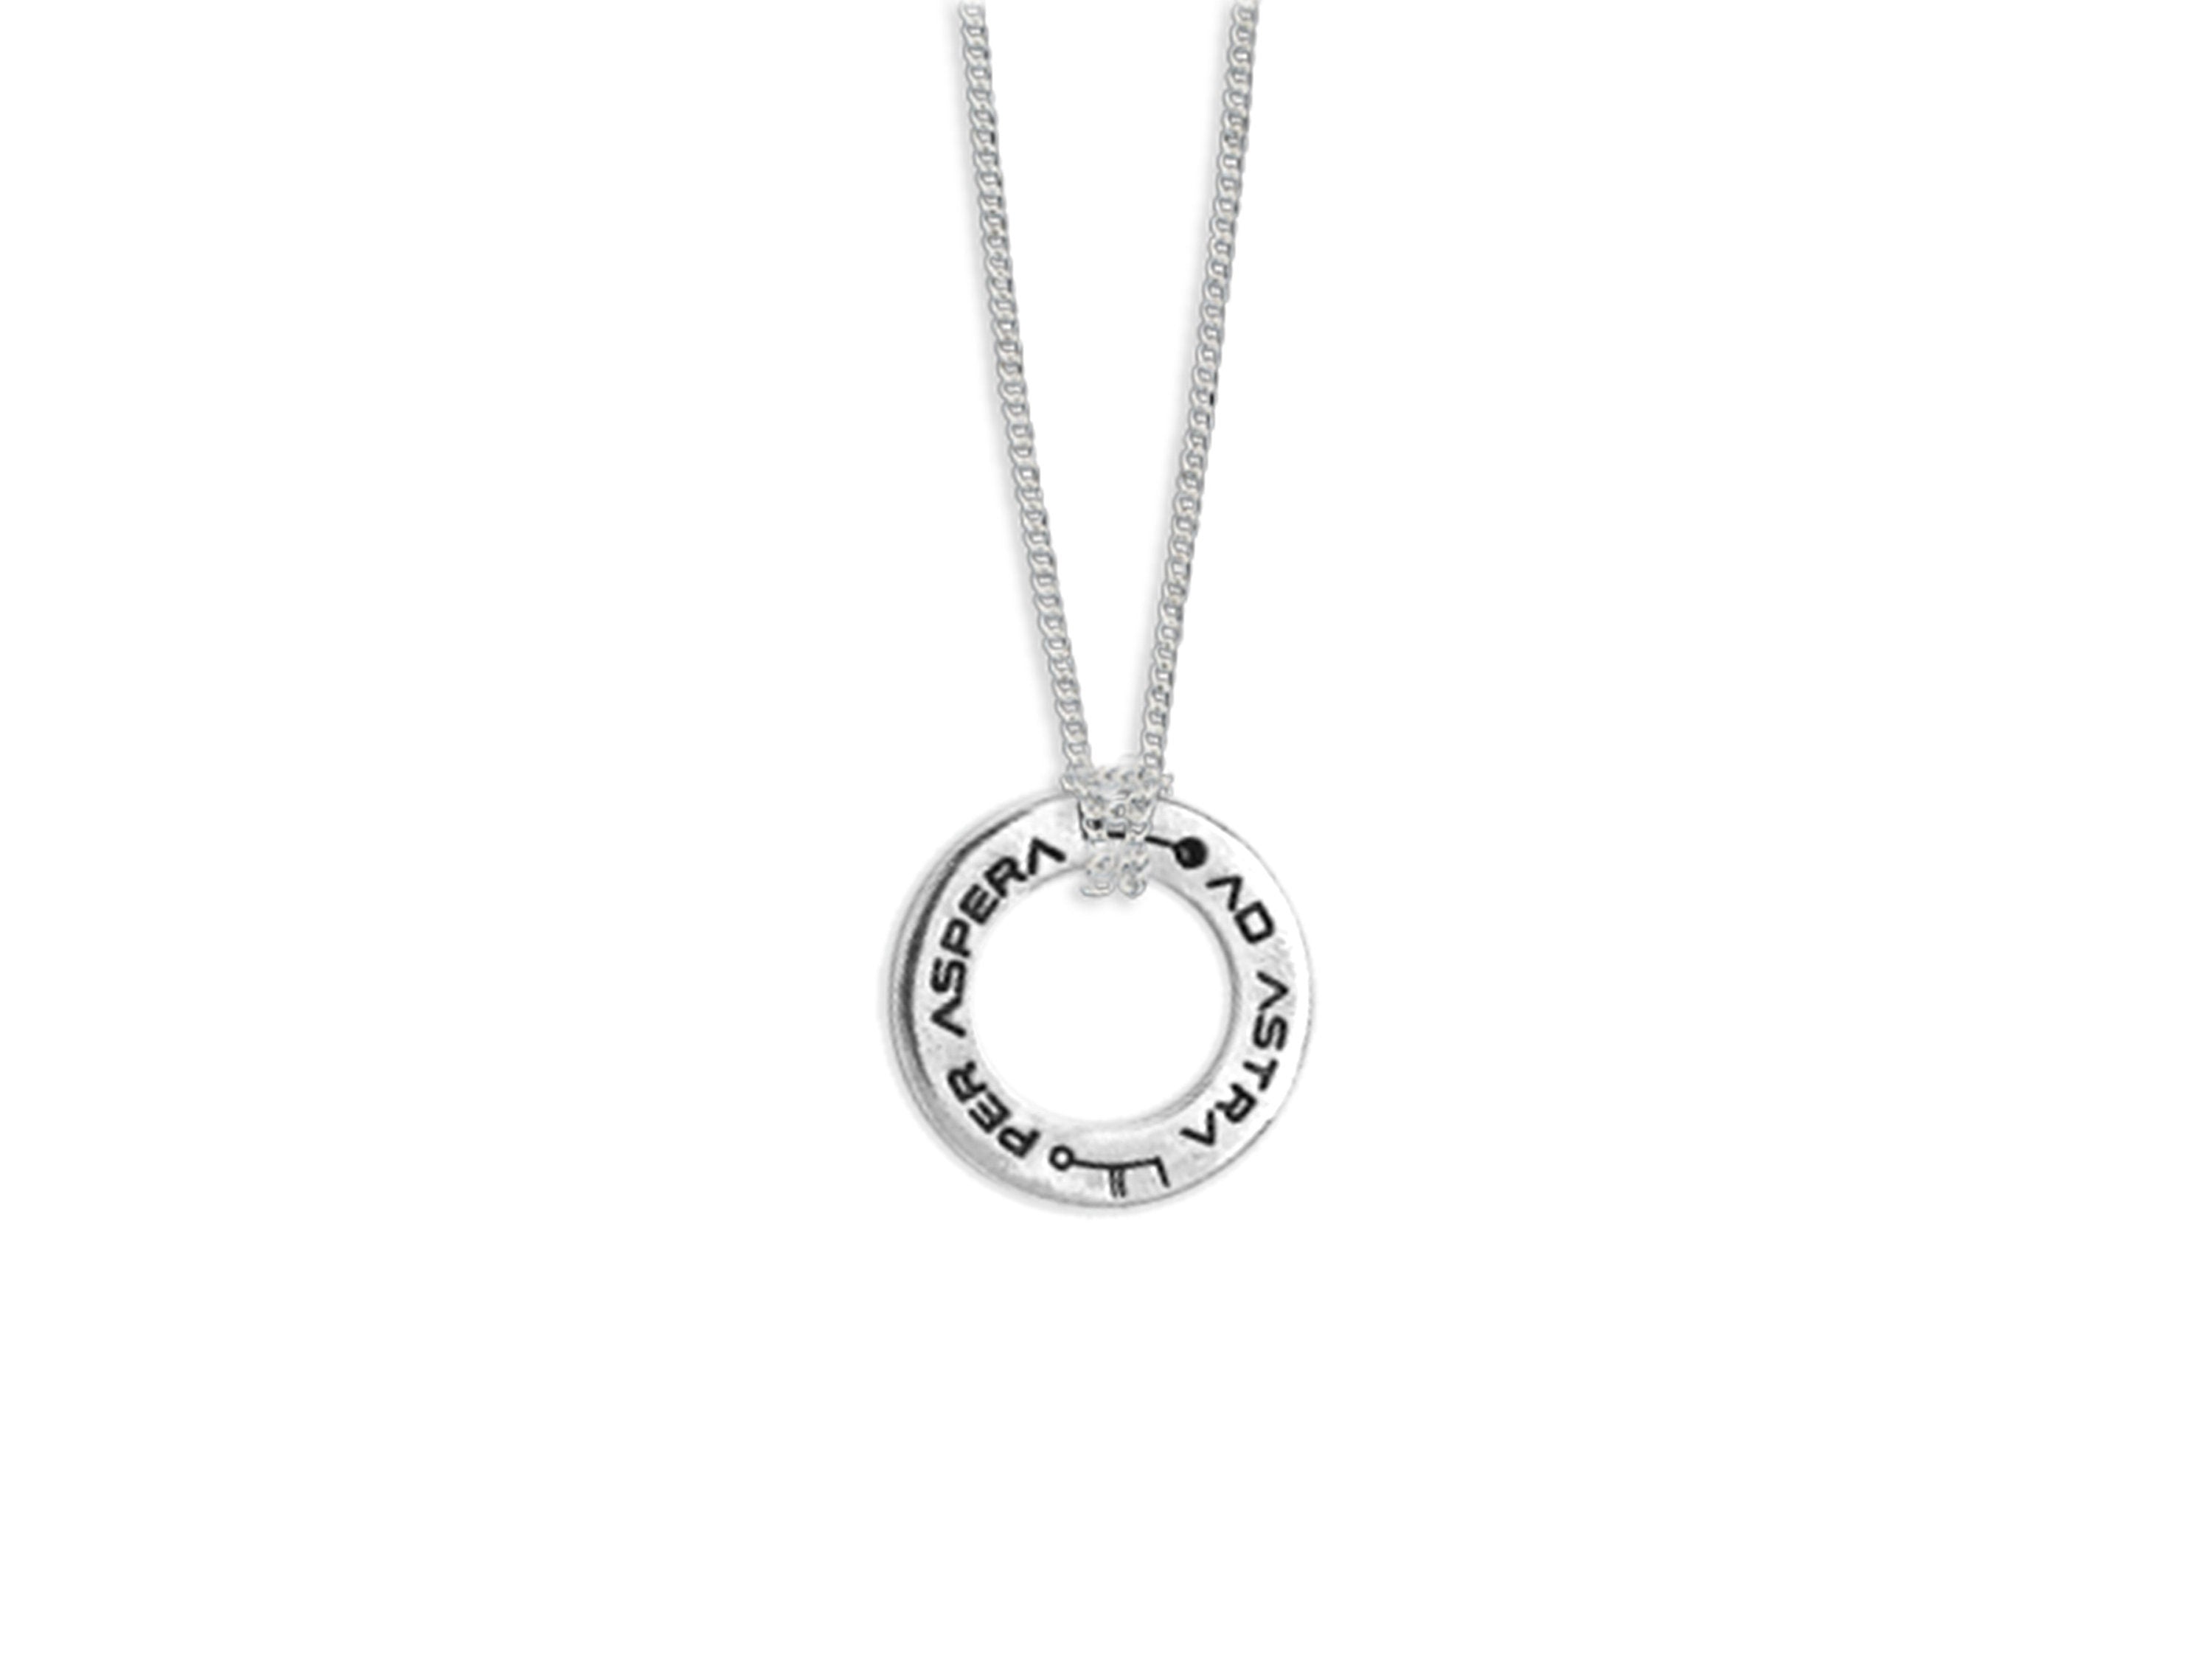 Sterling Silver Per Aspera Ad Astra Necklace - Men's/Women's Mars Meteorite Dust Necklace - Cyberpunk / Futuristic Jewelry